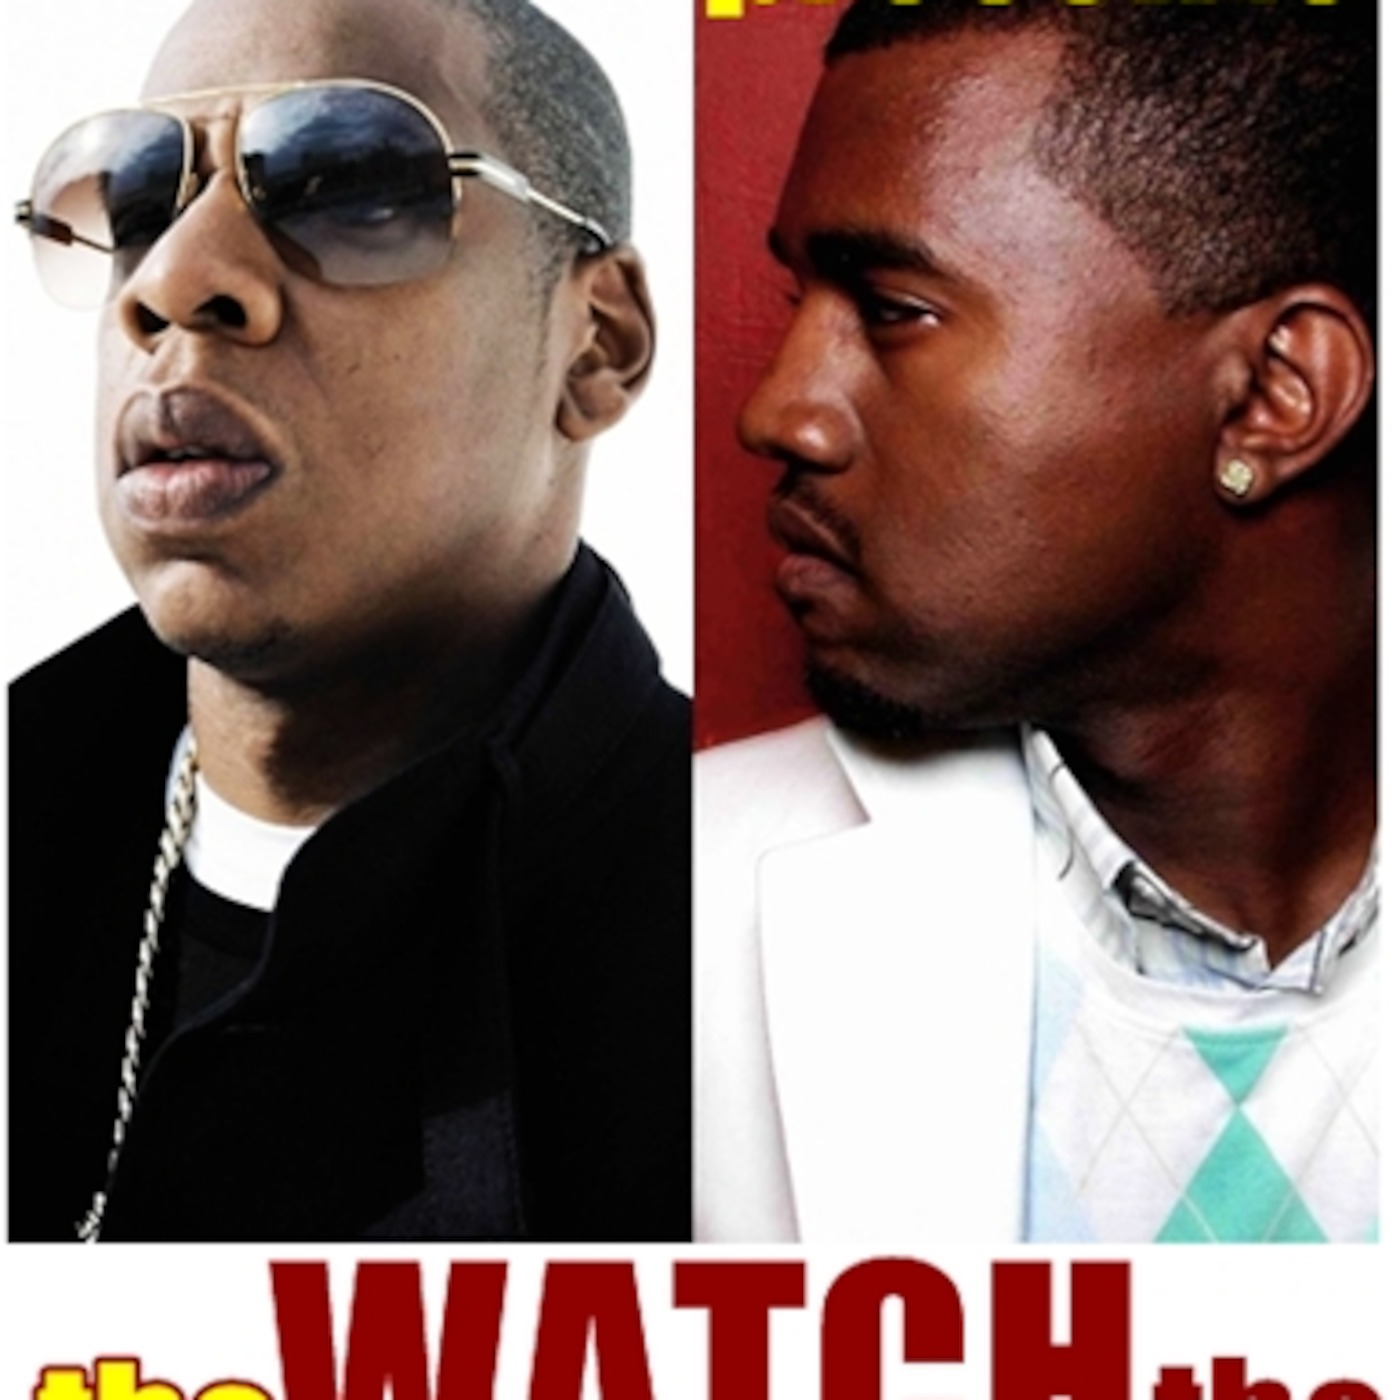 DJ KEL-WIN! Classic Jay-Z and Kanye West Mixtape